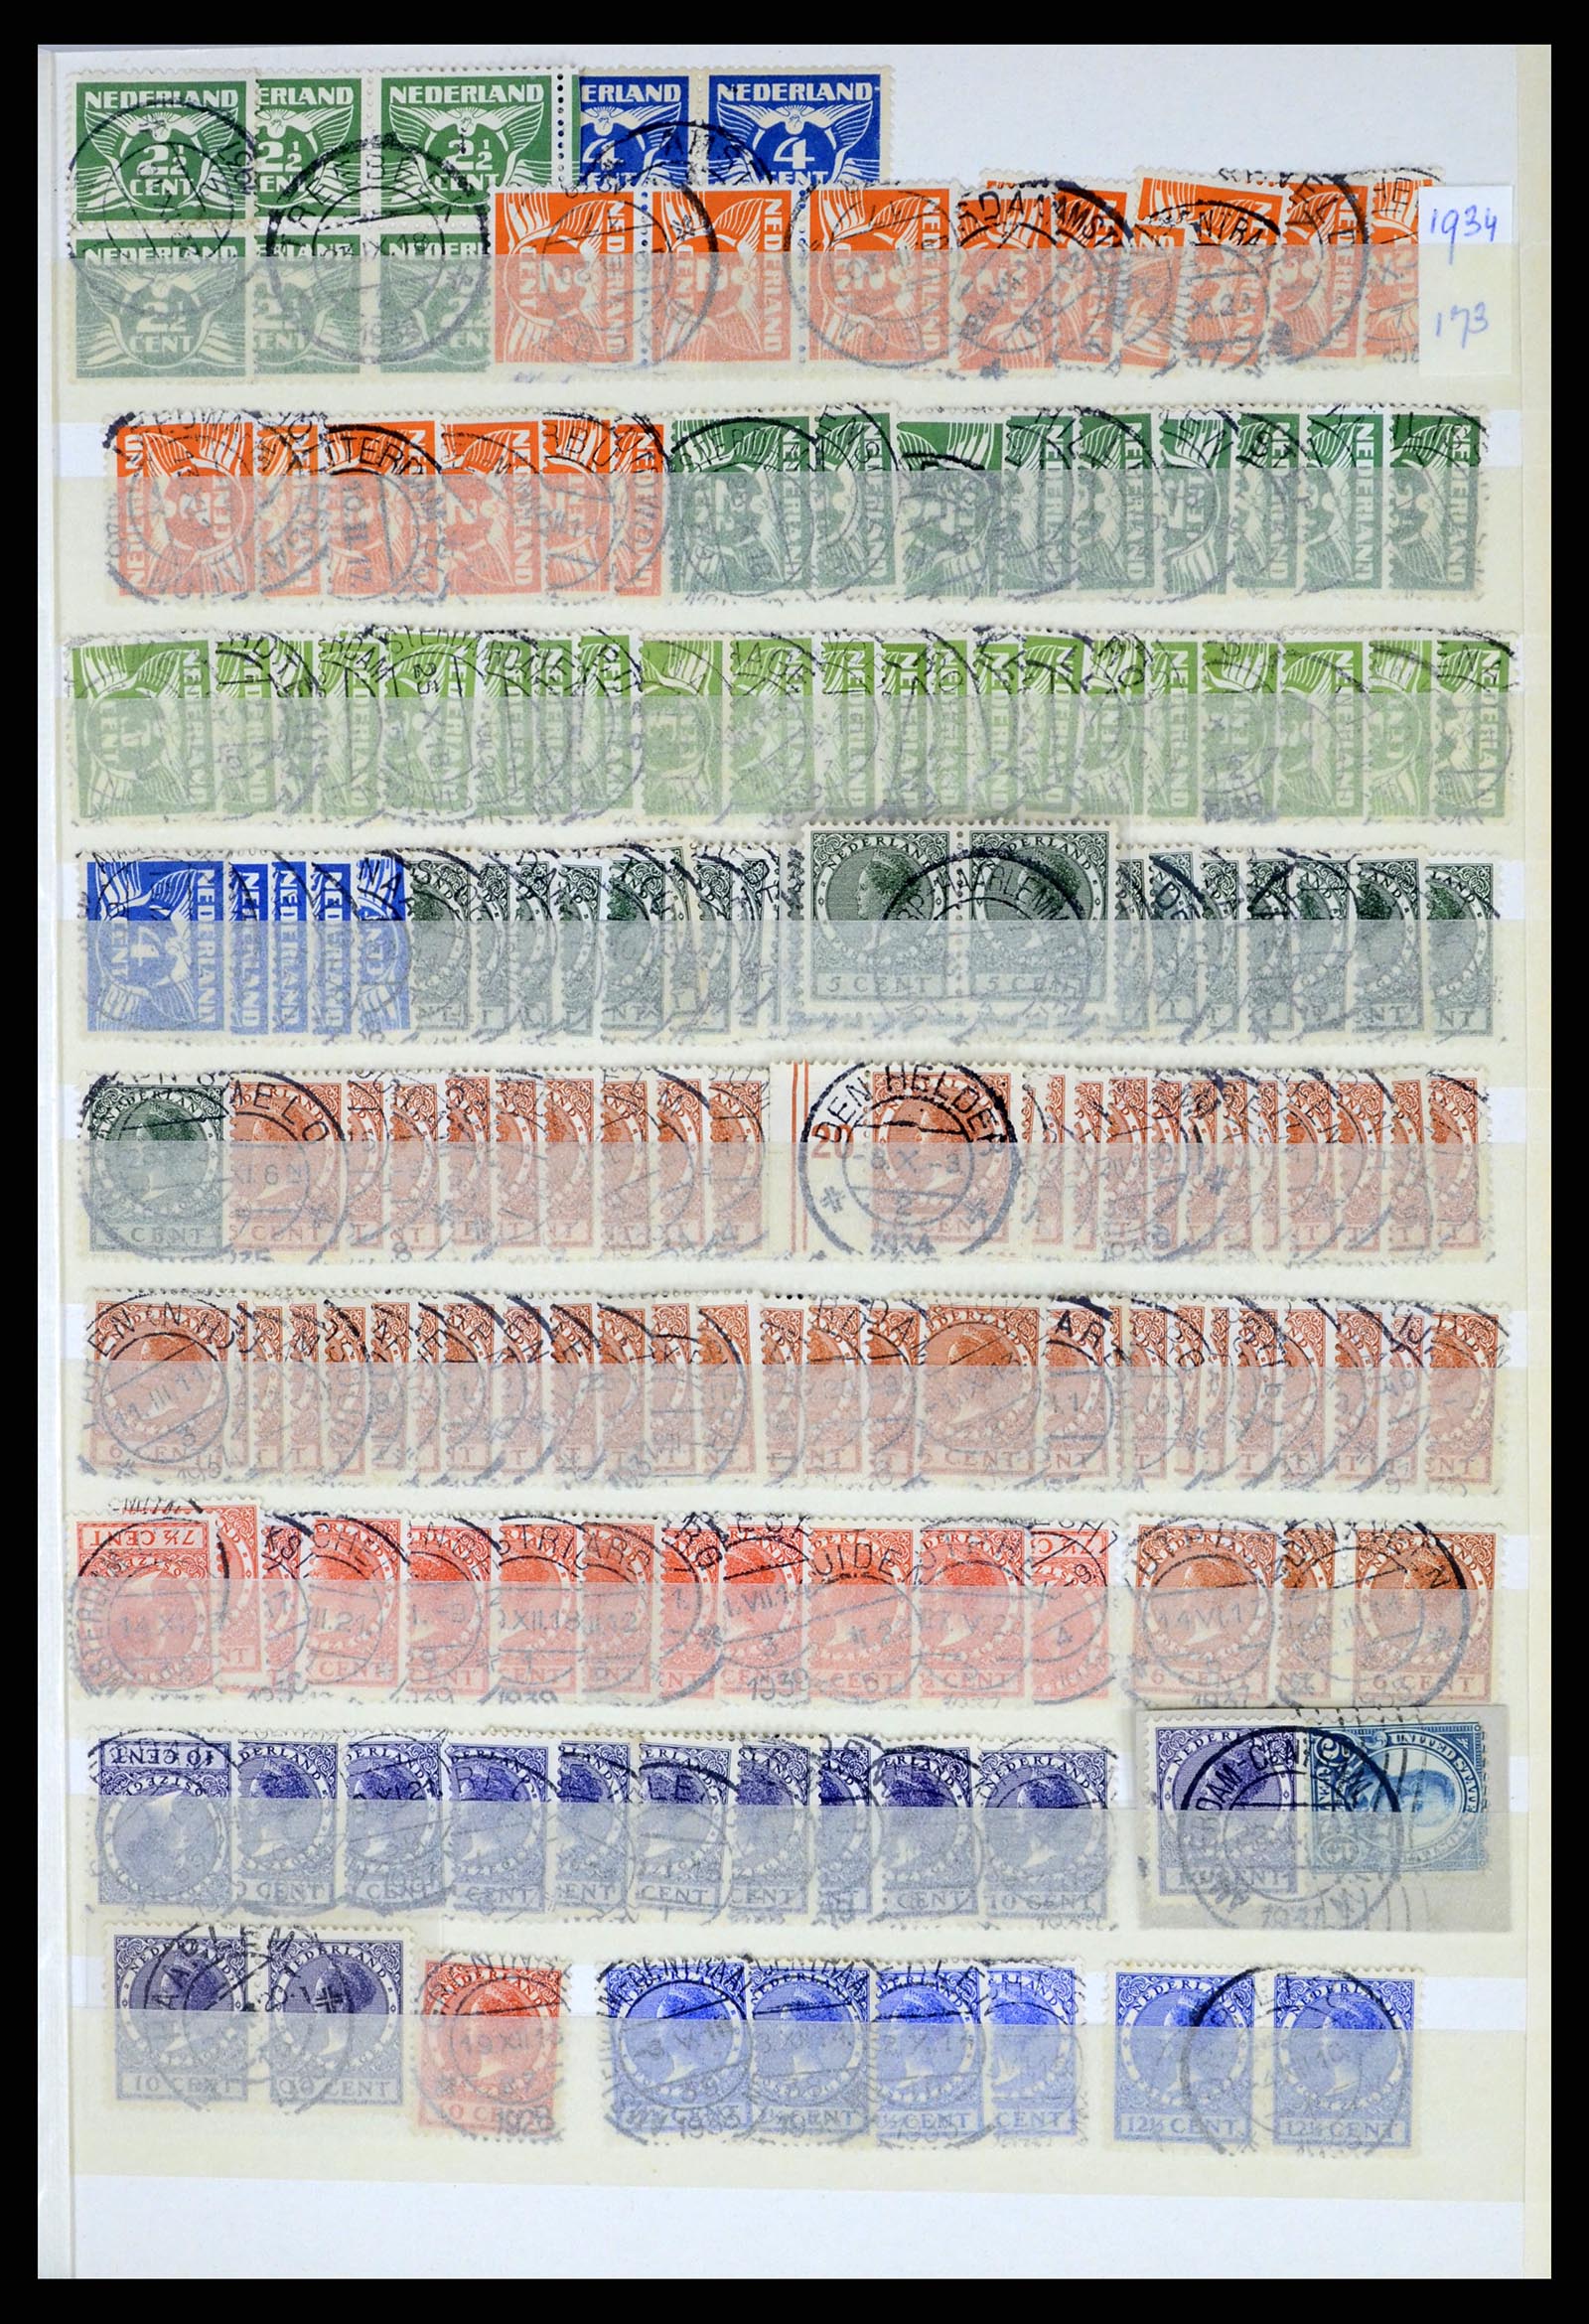 37424 009 - Stamp collection 37424 Netherlands shortbar cancels.